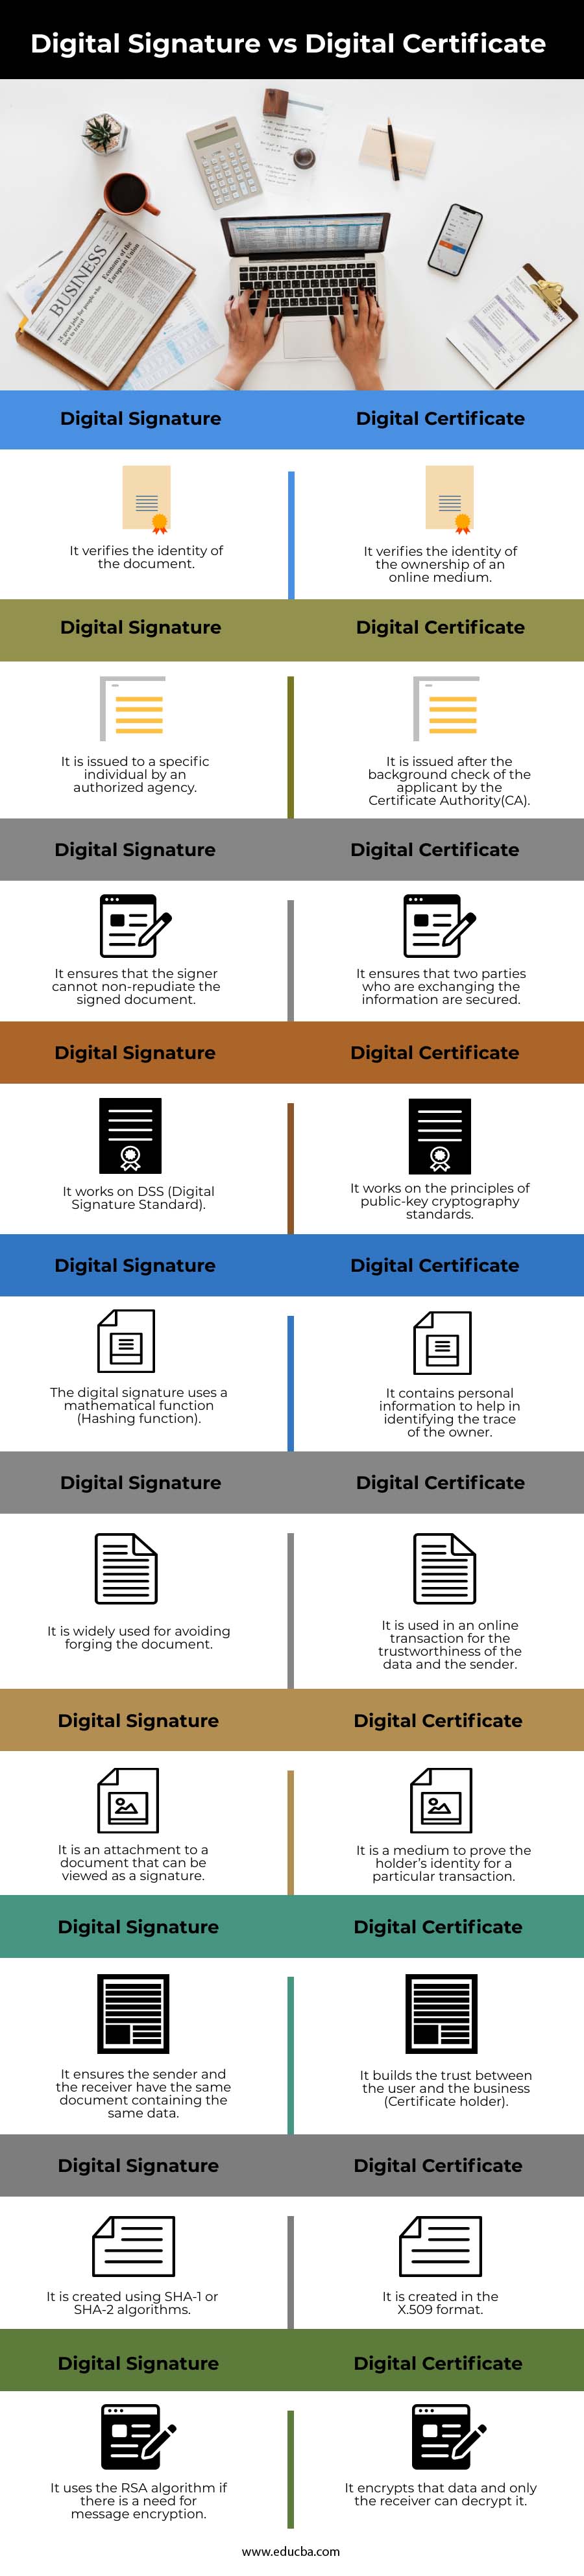 Digital Signature vs Digital Certificate info